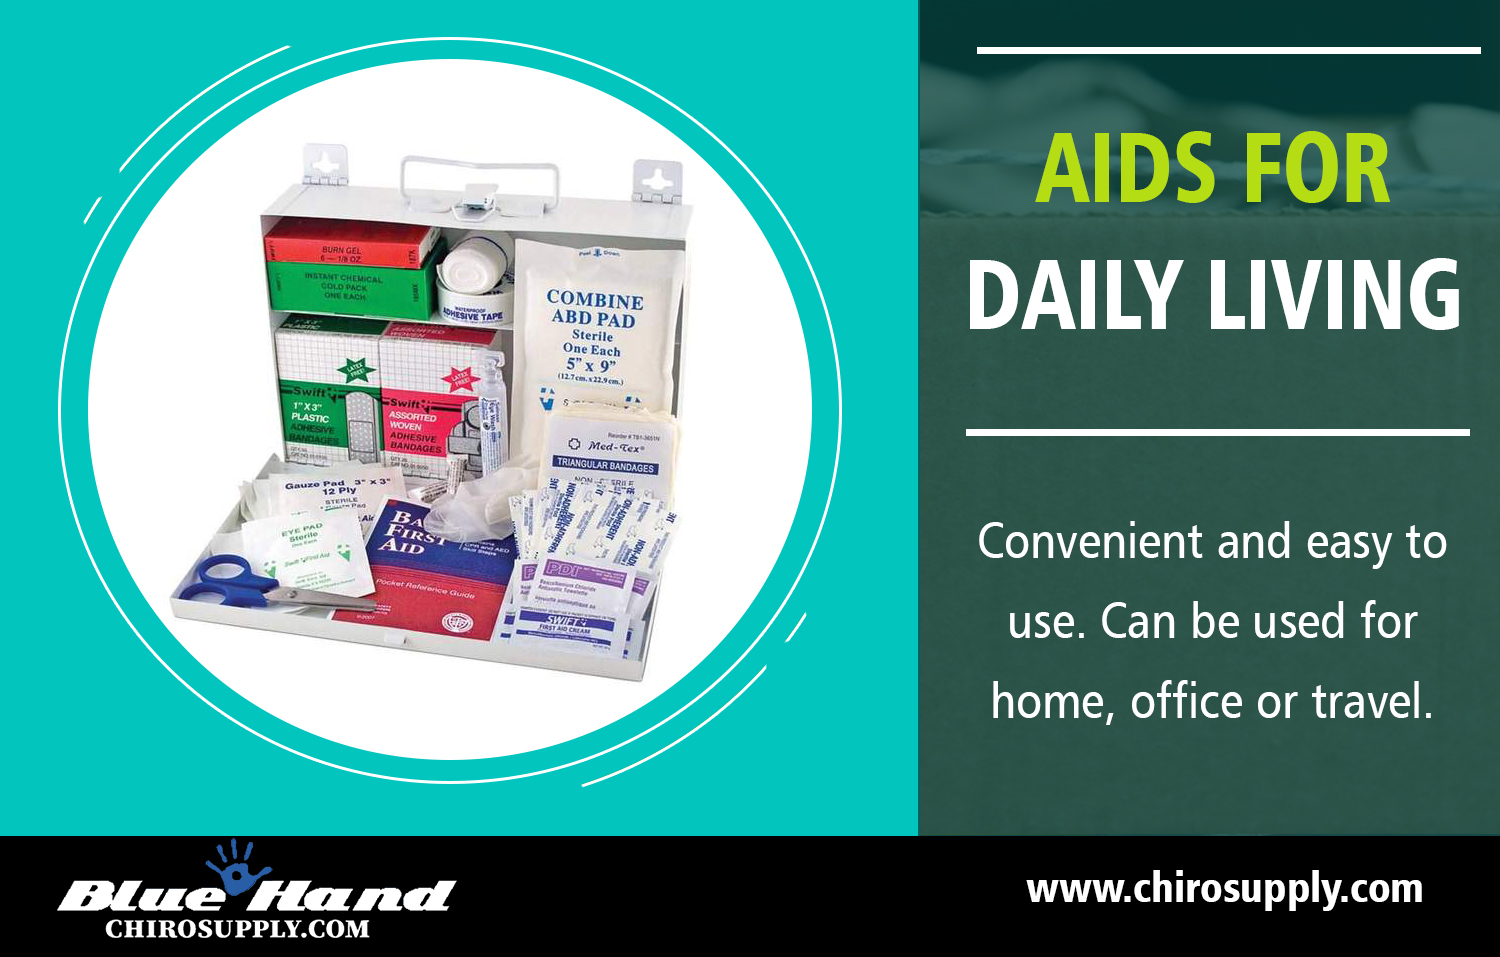 Aids for Daily Living | 8775639660 | chirosupply.com